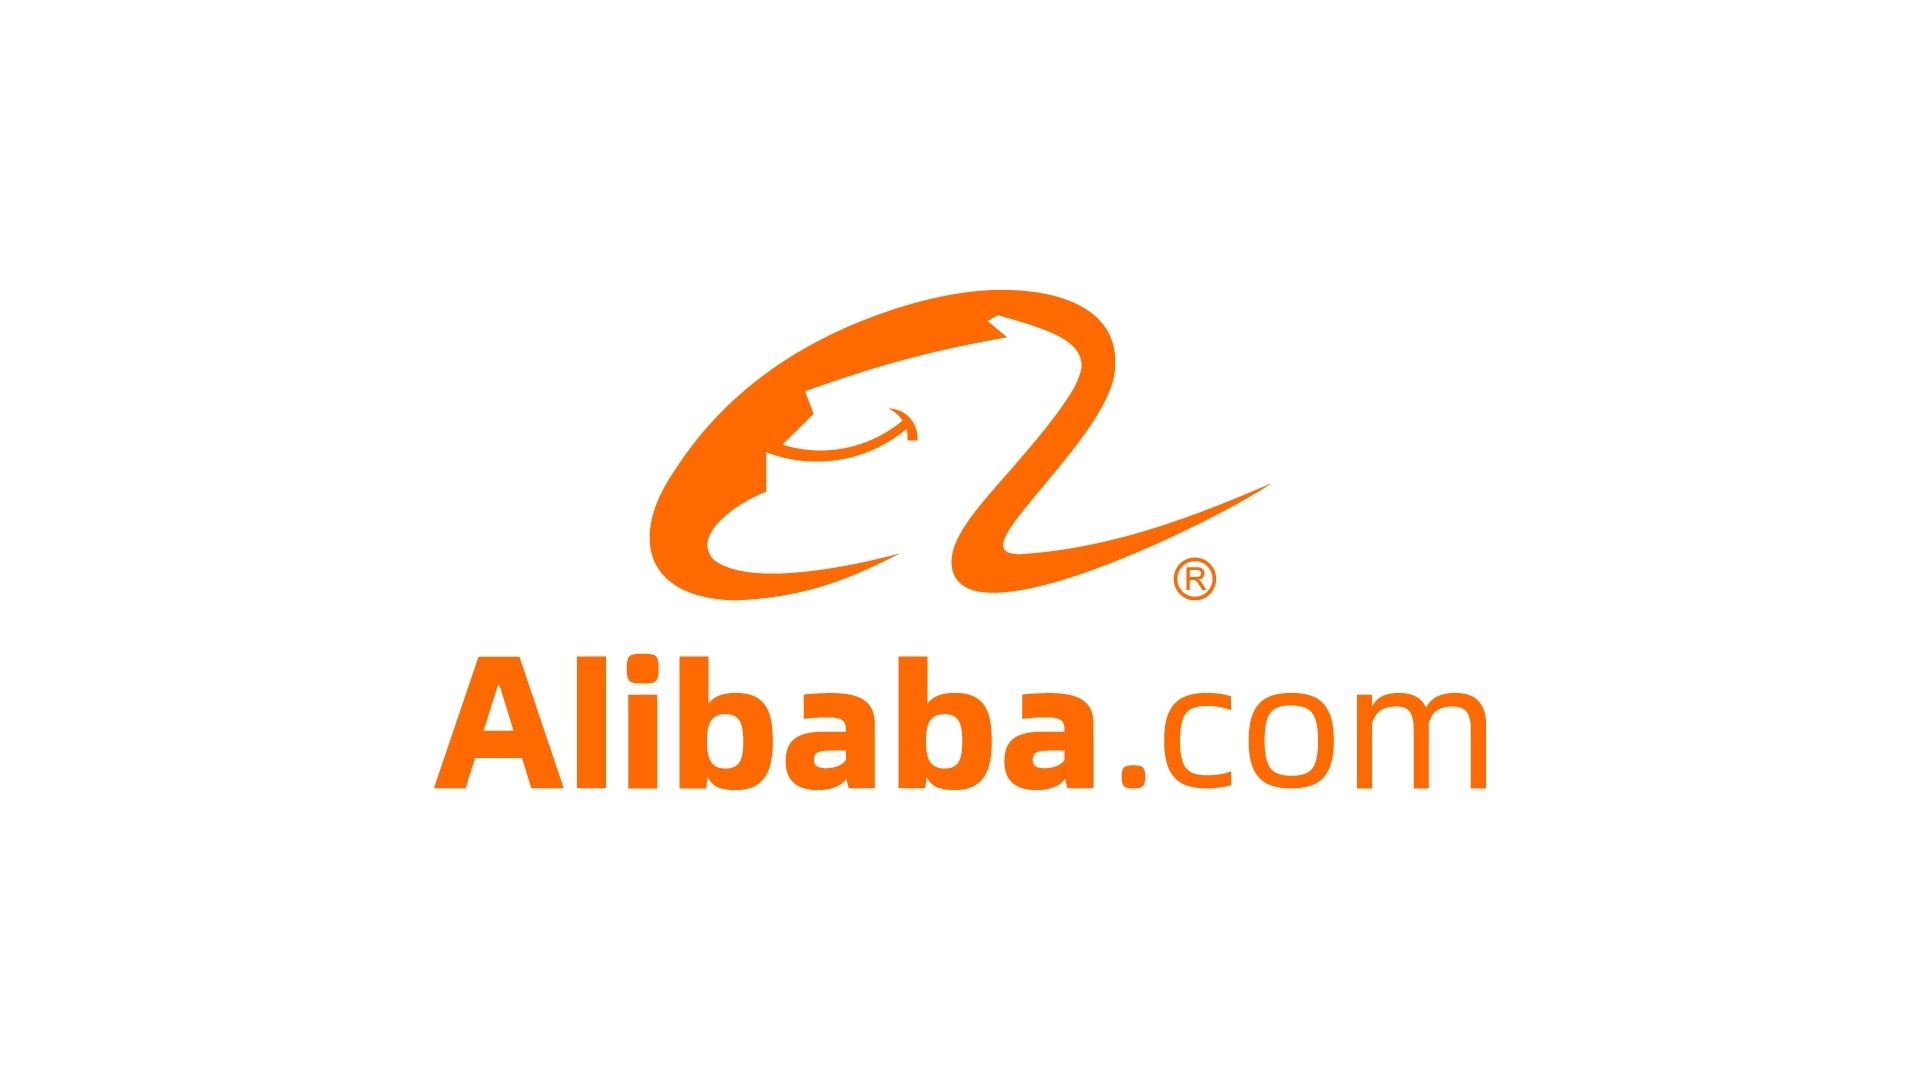 https://mms.businesswire.com/media/20200602005208/en/795261/5/Alibaba.com_logo_orange_primary.jpg 